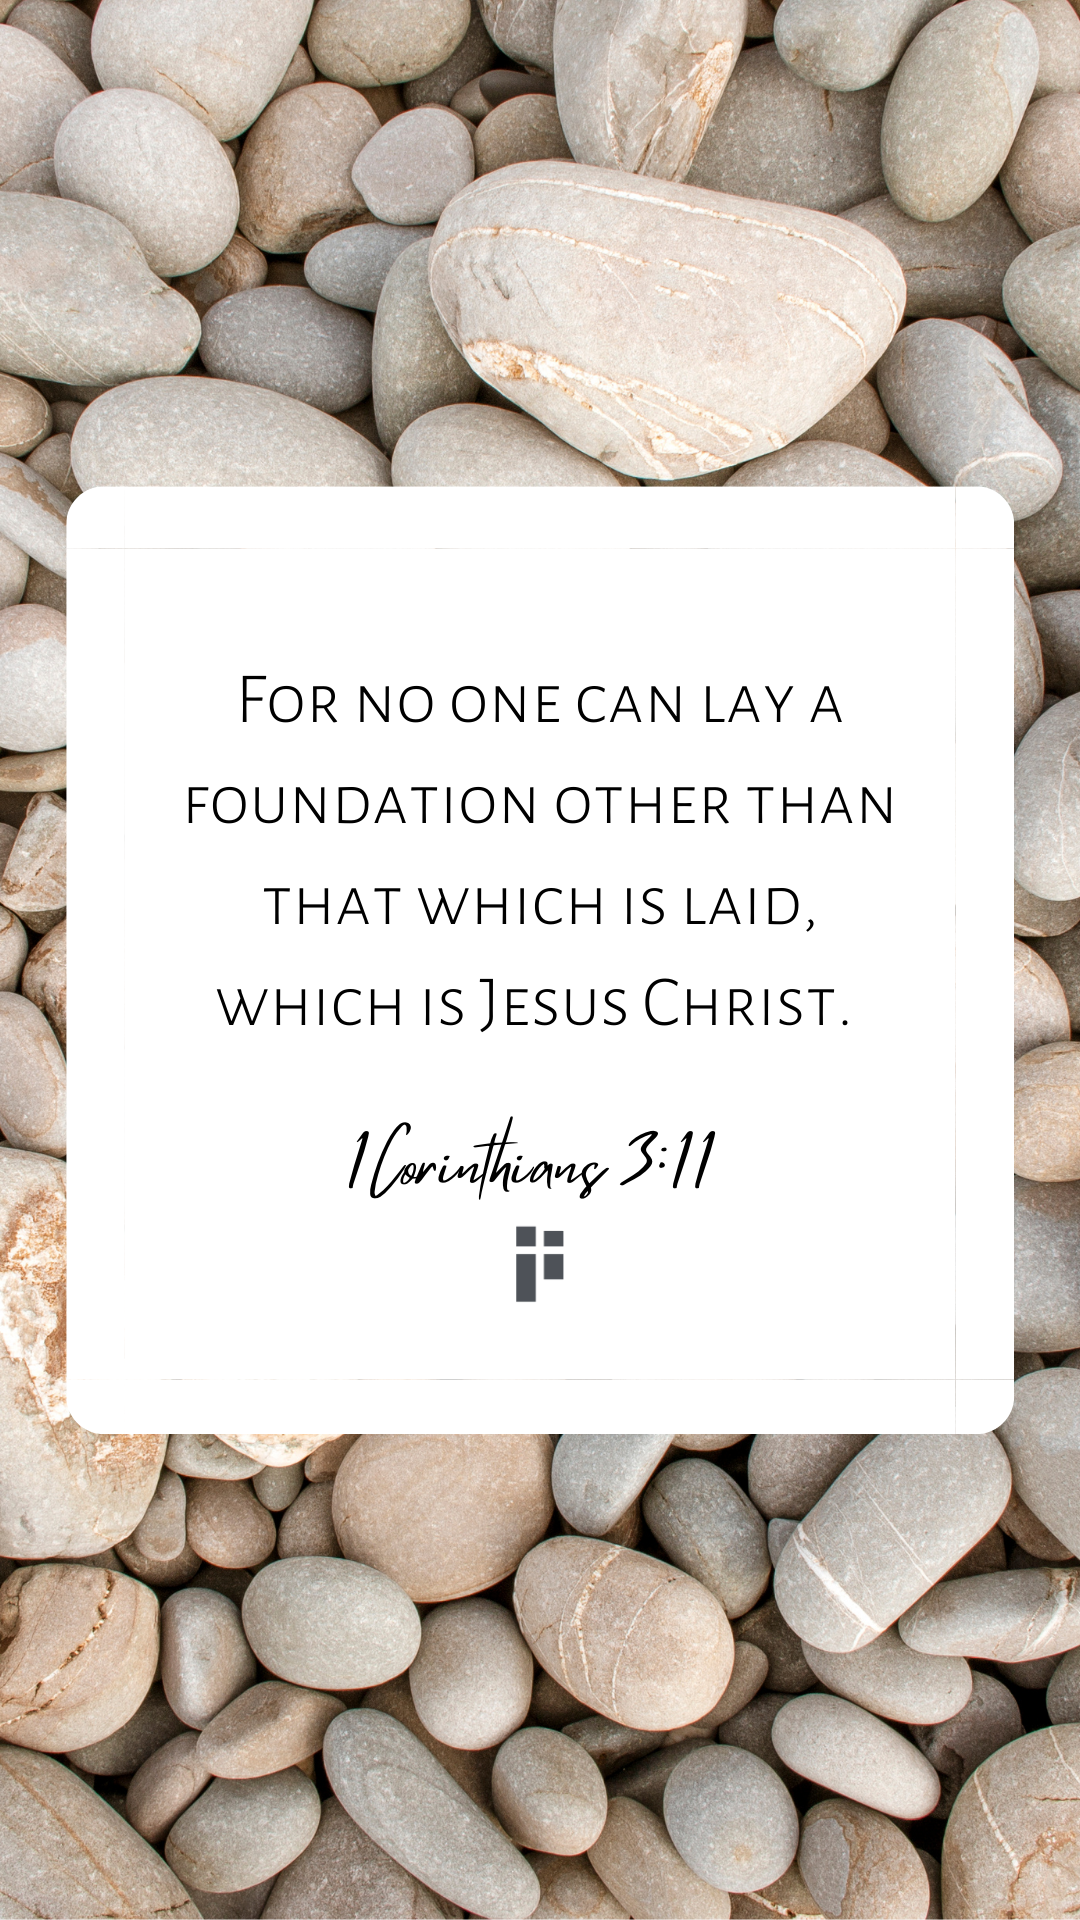 1 Corinthians 3:11